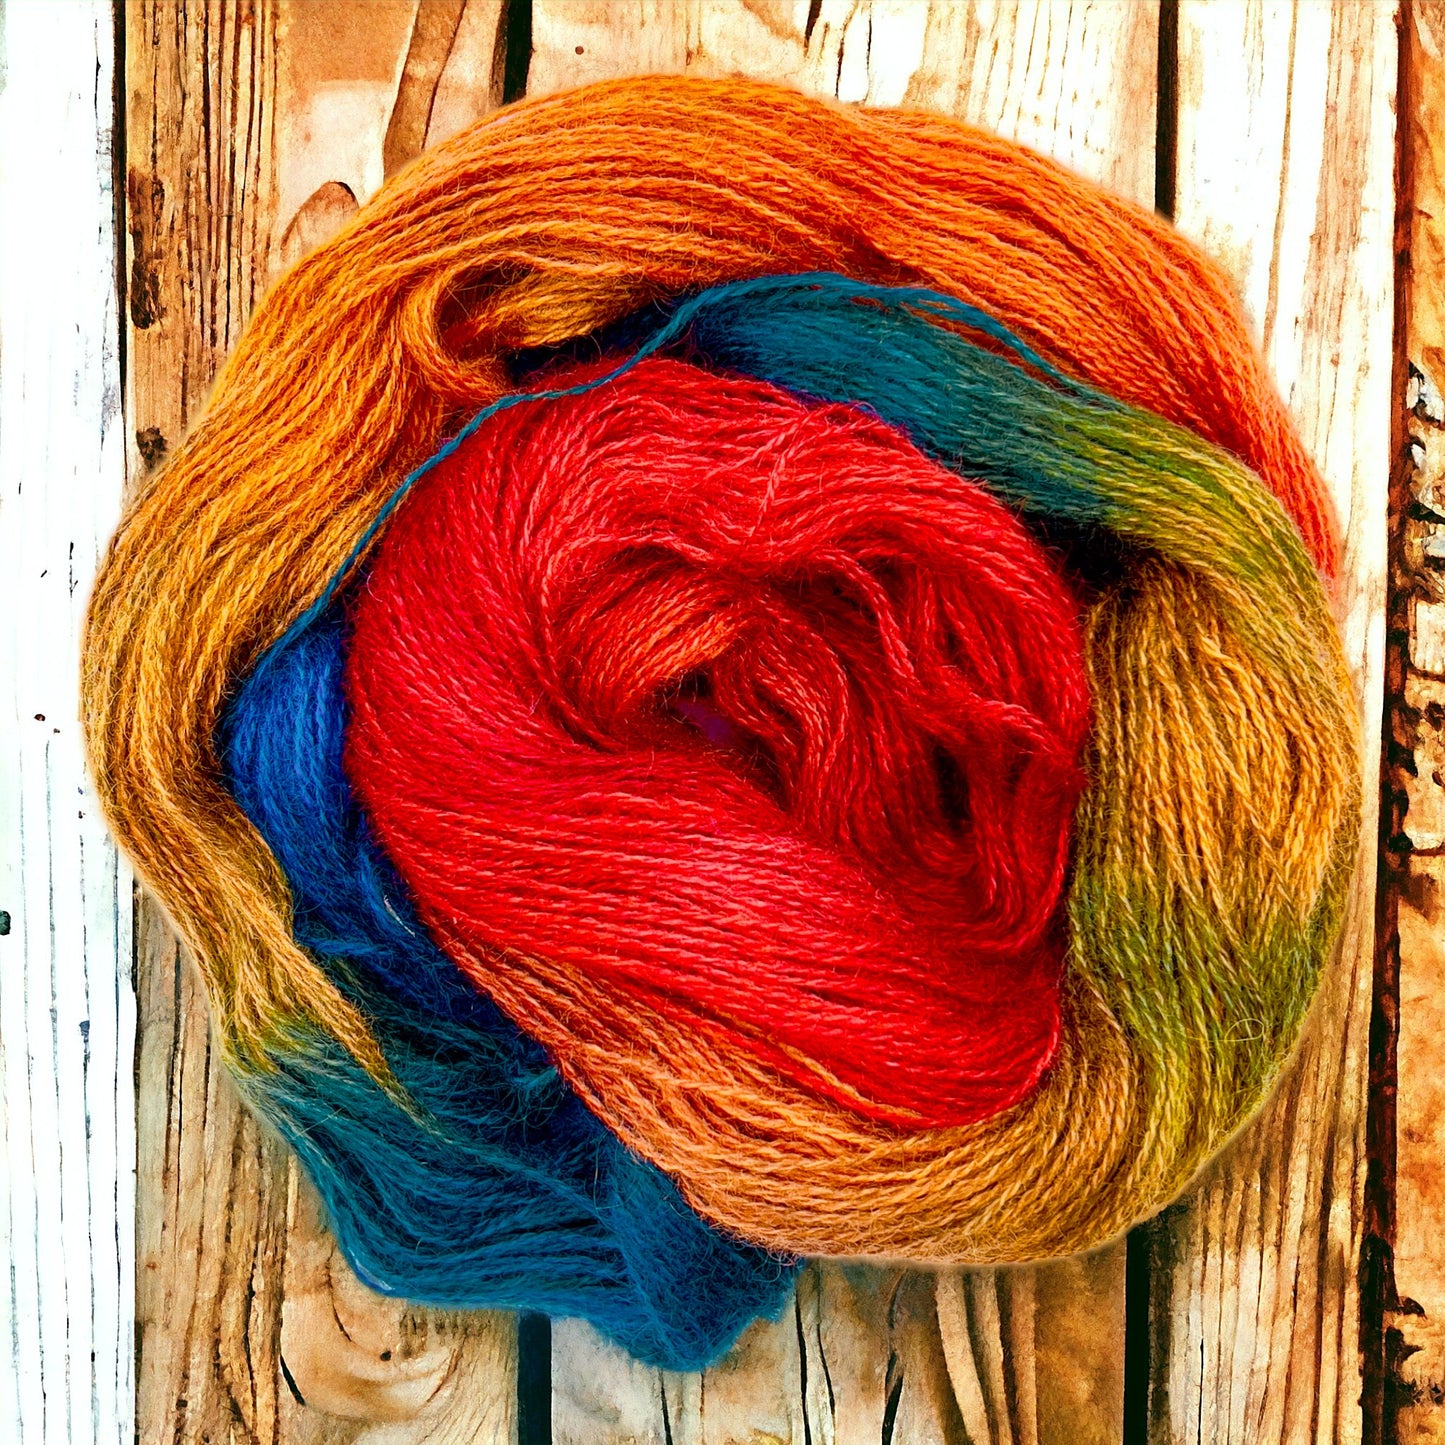 Teeswater yarn  - 4ply - Skein